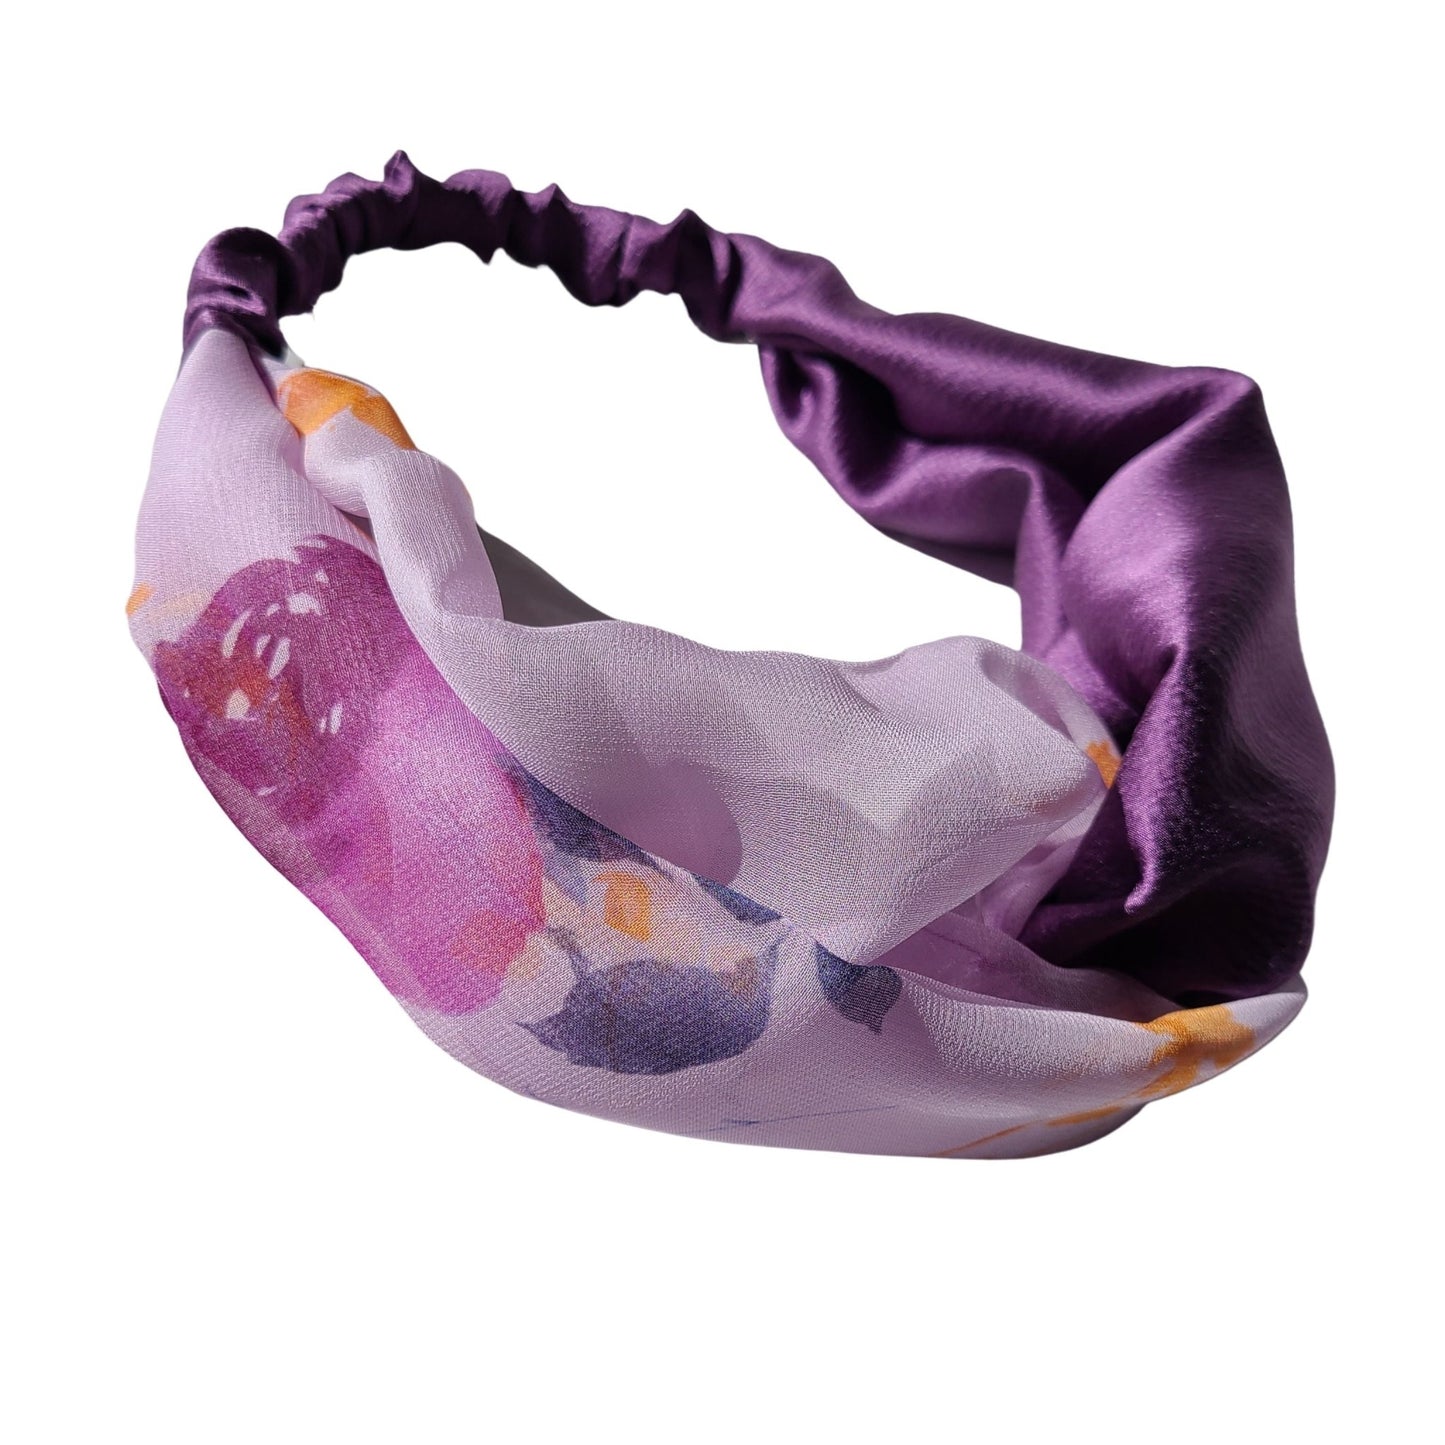 Silk Headband - Spring Blooms - Knot Style - RBelliard